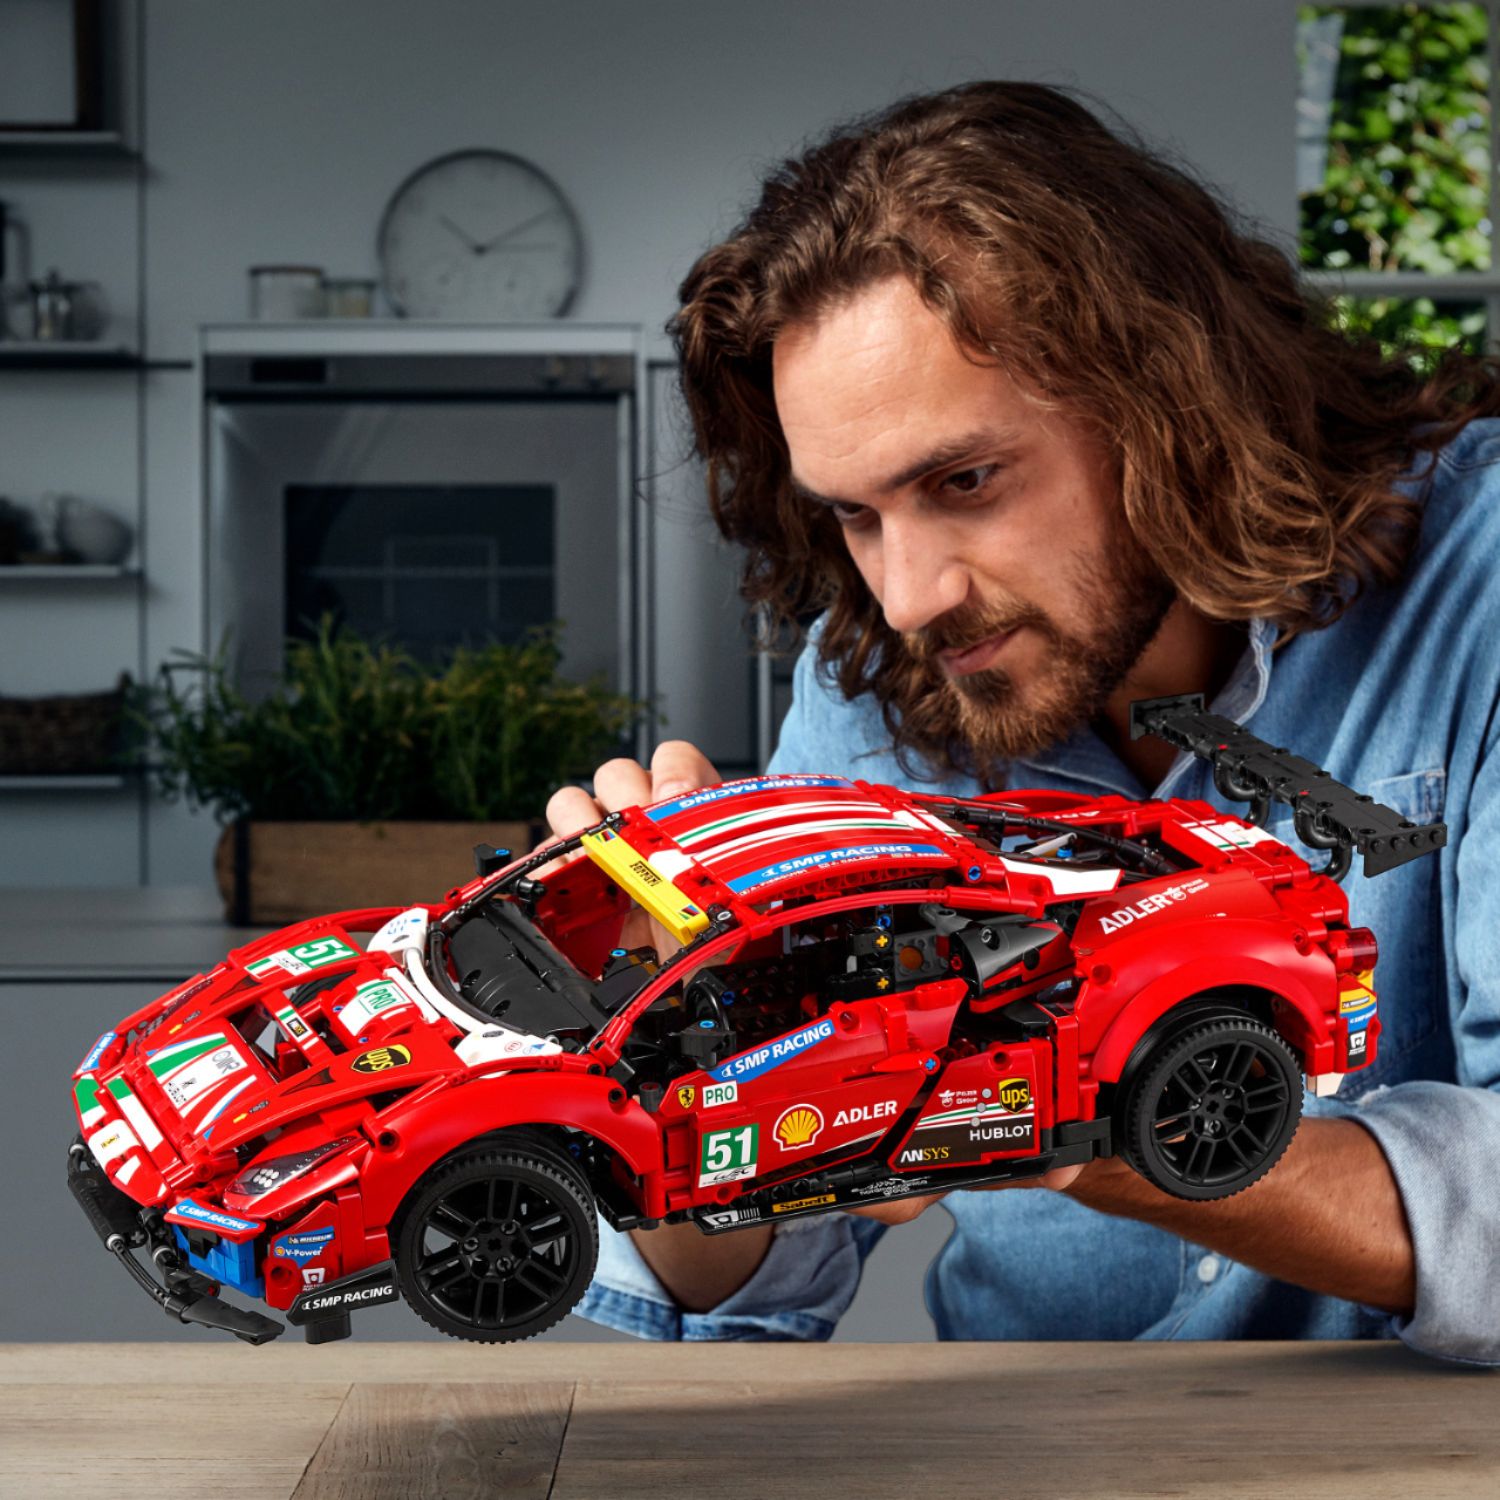 LEGO Technic Ferrari 488 GTE AF Corse 51 42125 6332760 - Best Buy